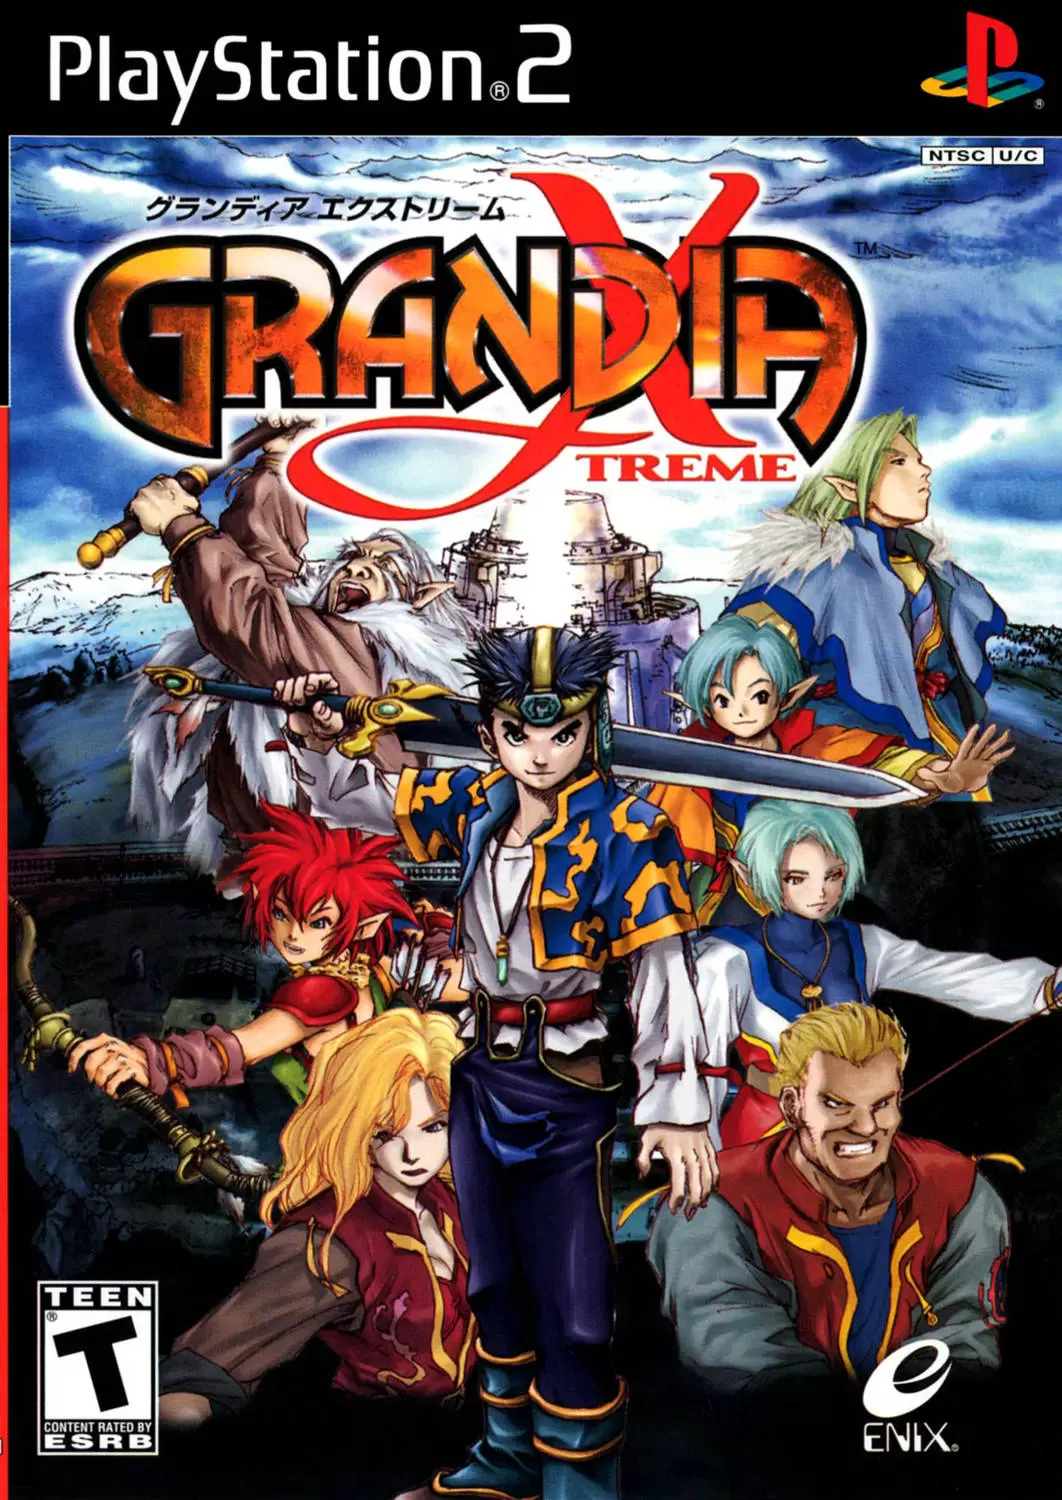 PS2 Games - Grandia Xtreme